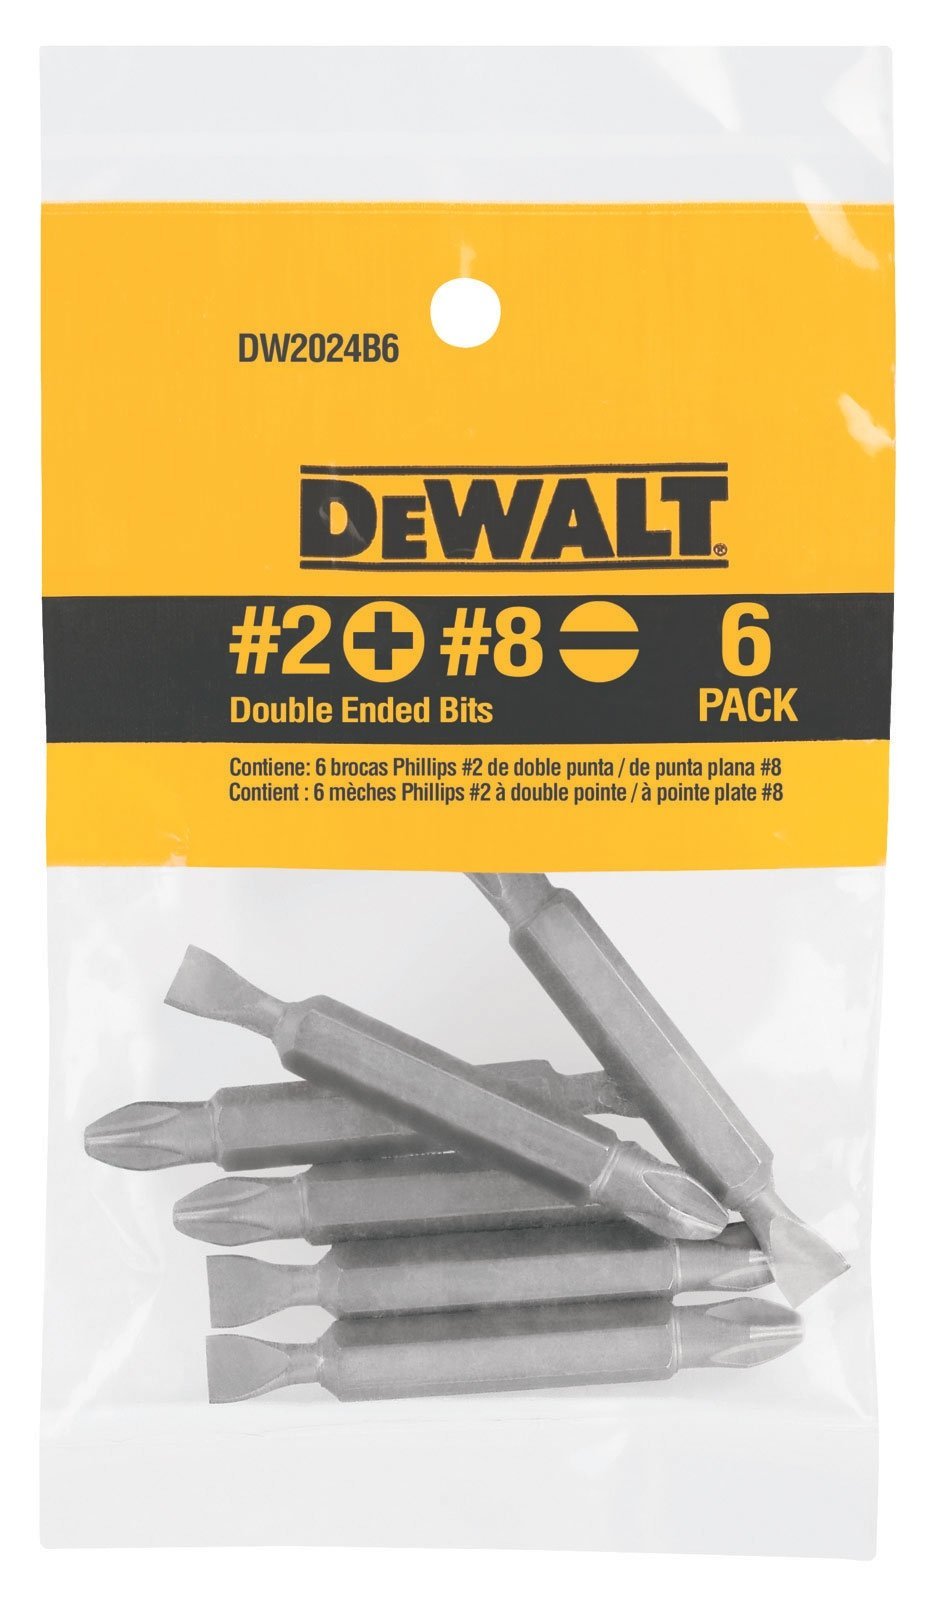 DEWALT Screwdriver Set, #2 Phillips / No. 8 Slotted Double Ended Bit, 6-Pack (DW2024B6) - NewNest Australia